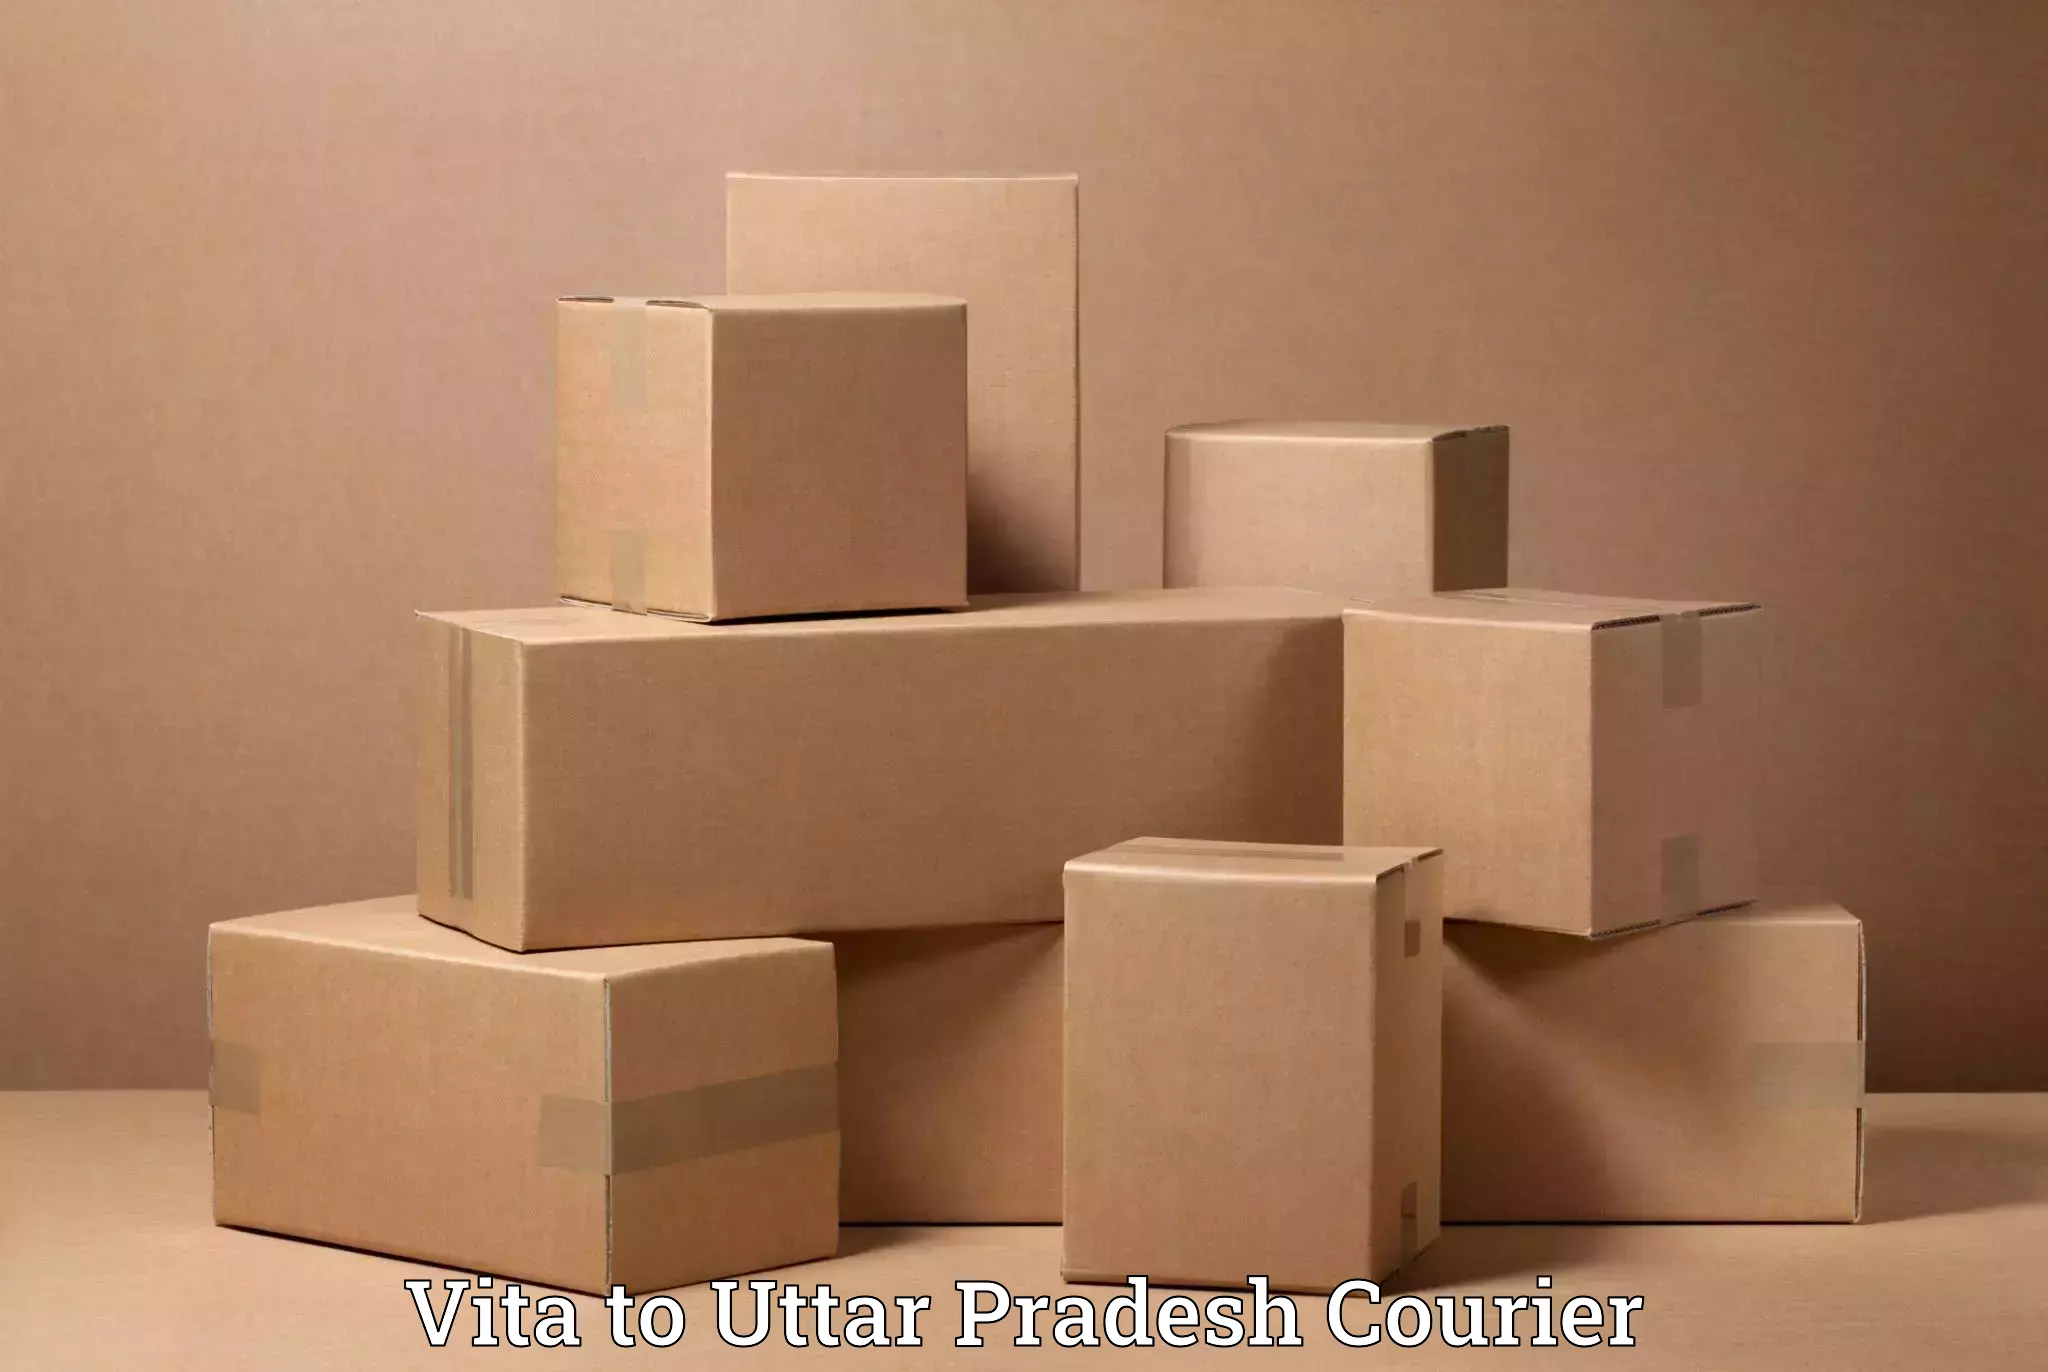 Professional home movers Vita to Uttar Pradesh